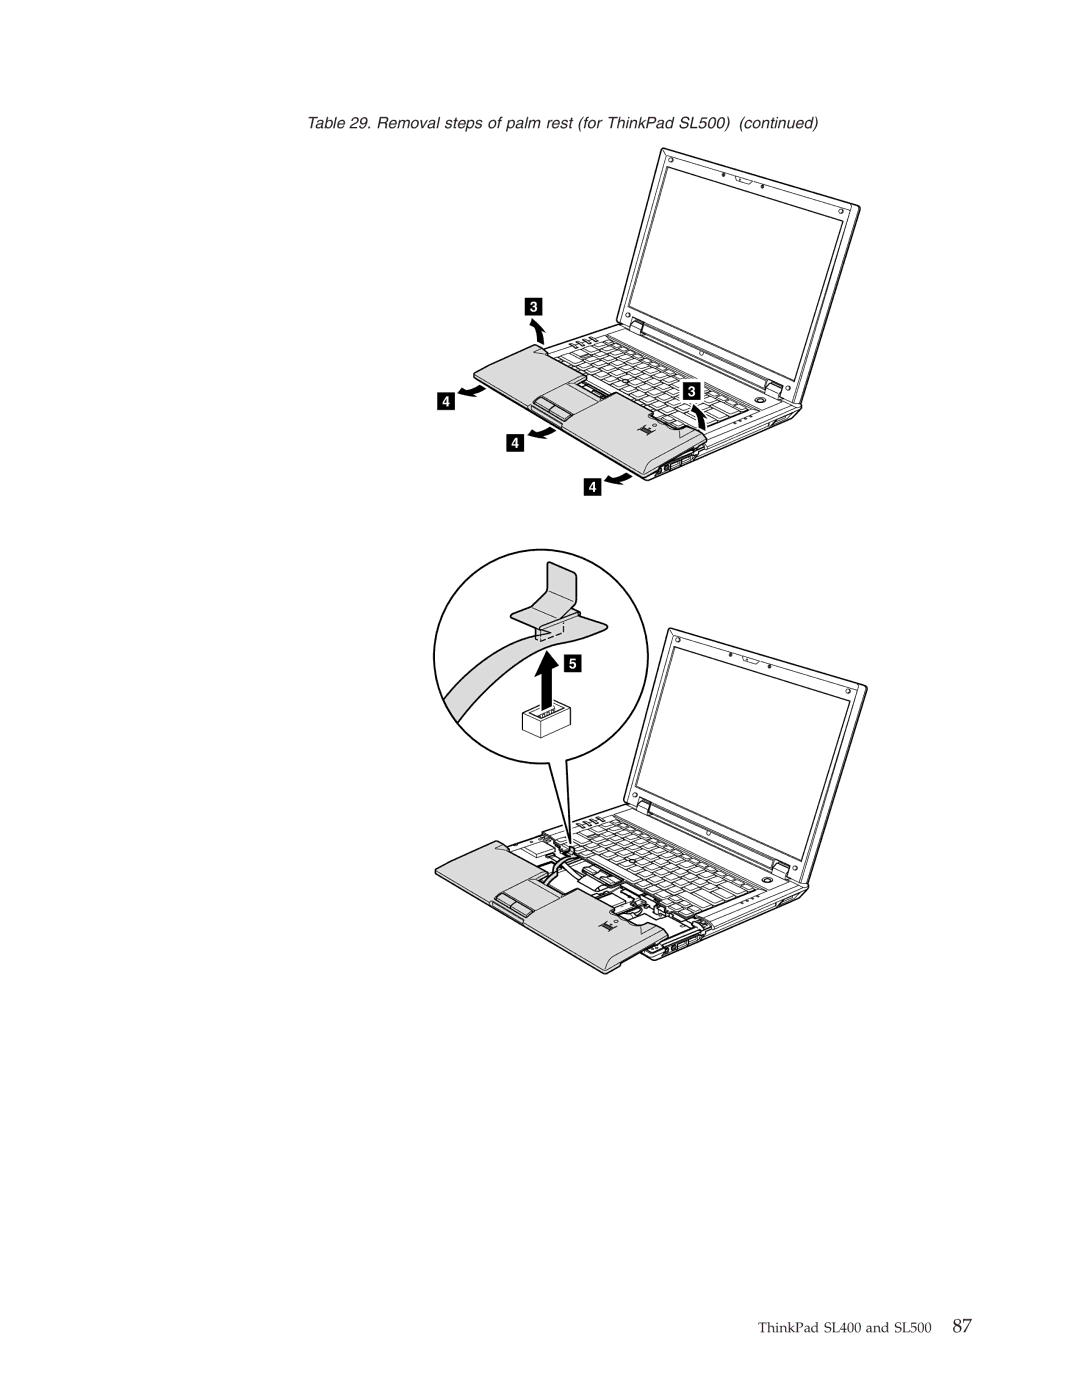 IBM manual Removal steps of palm rest for ThinkPad SL500 